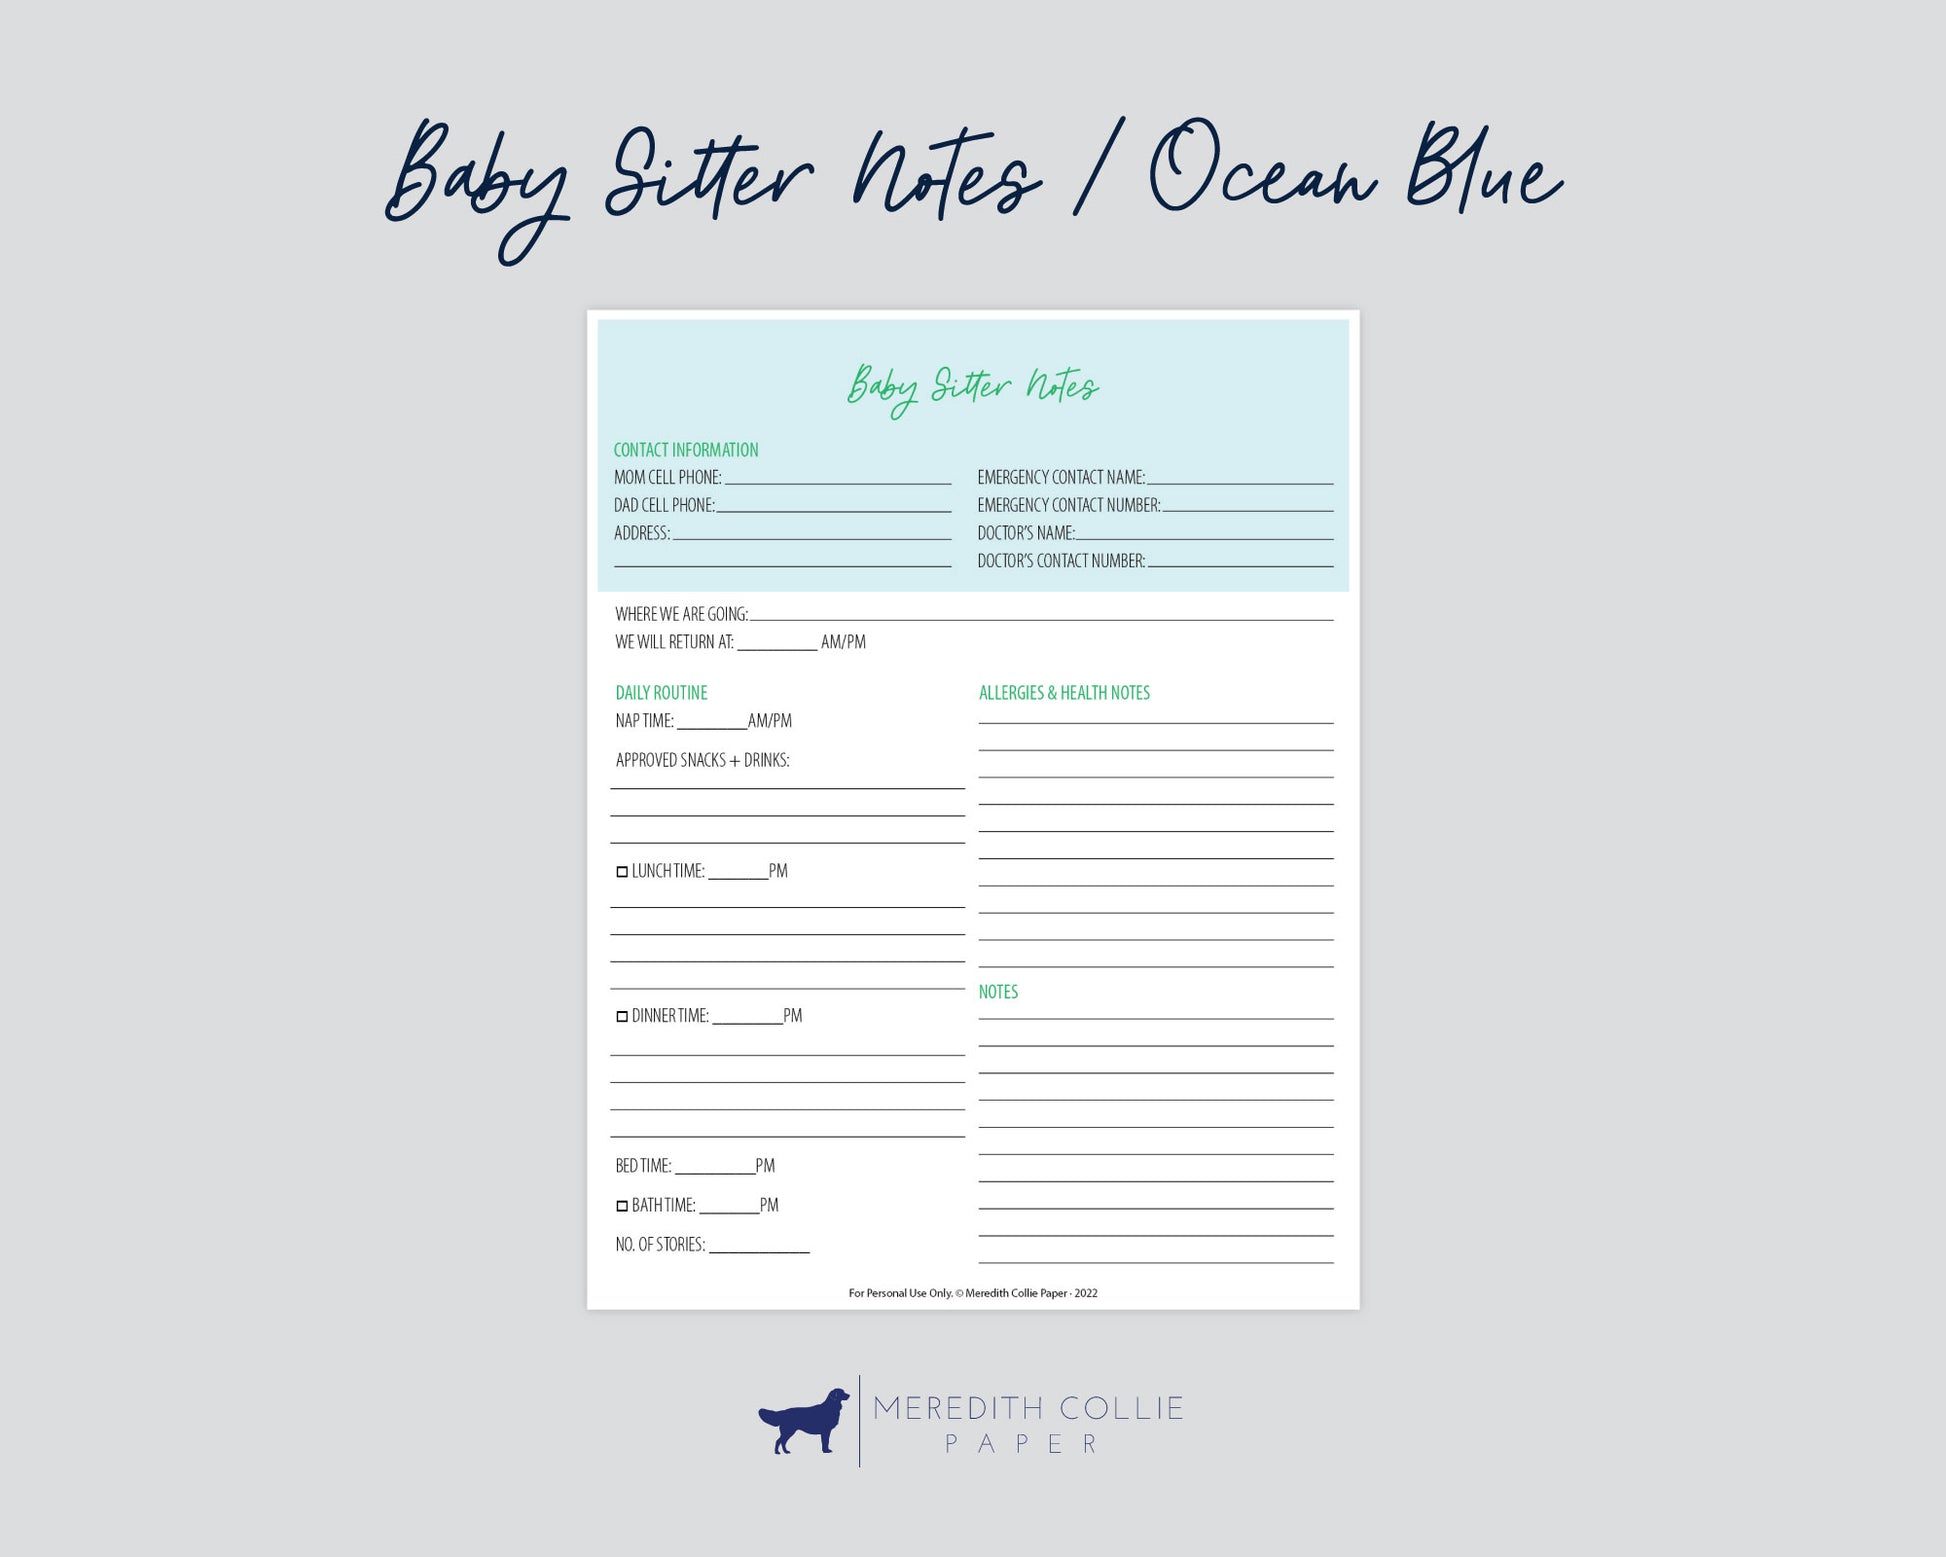 baby sitter notes, ocean blue, digital download, Meredith Collie paper